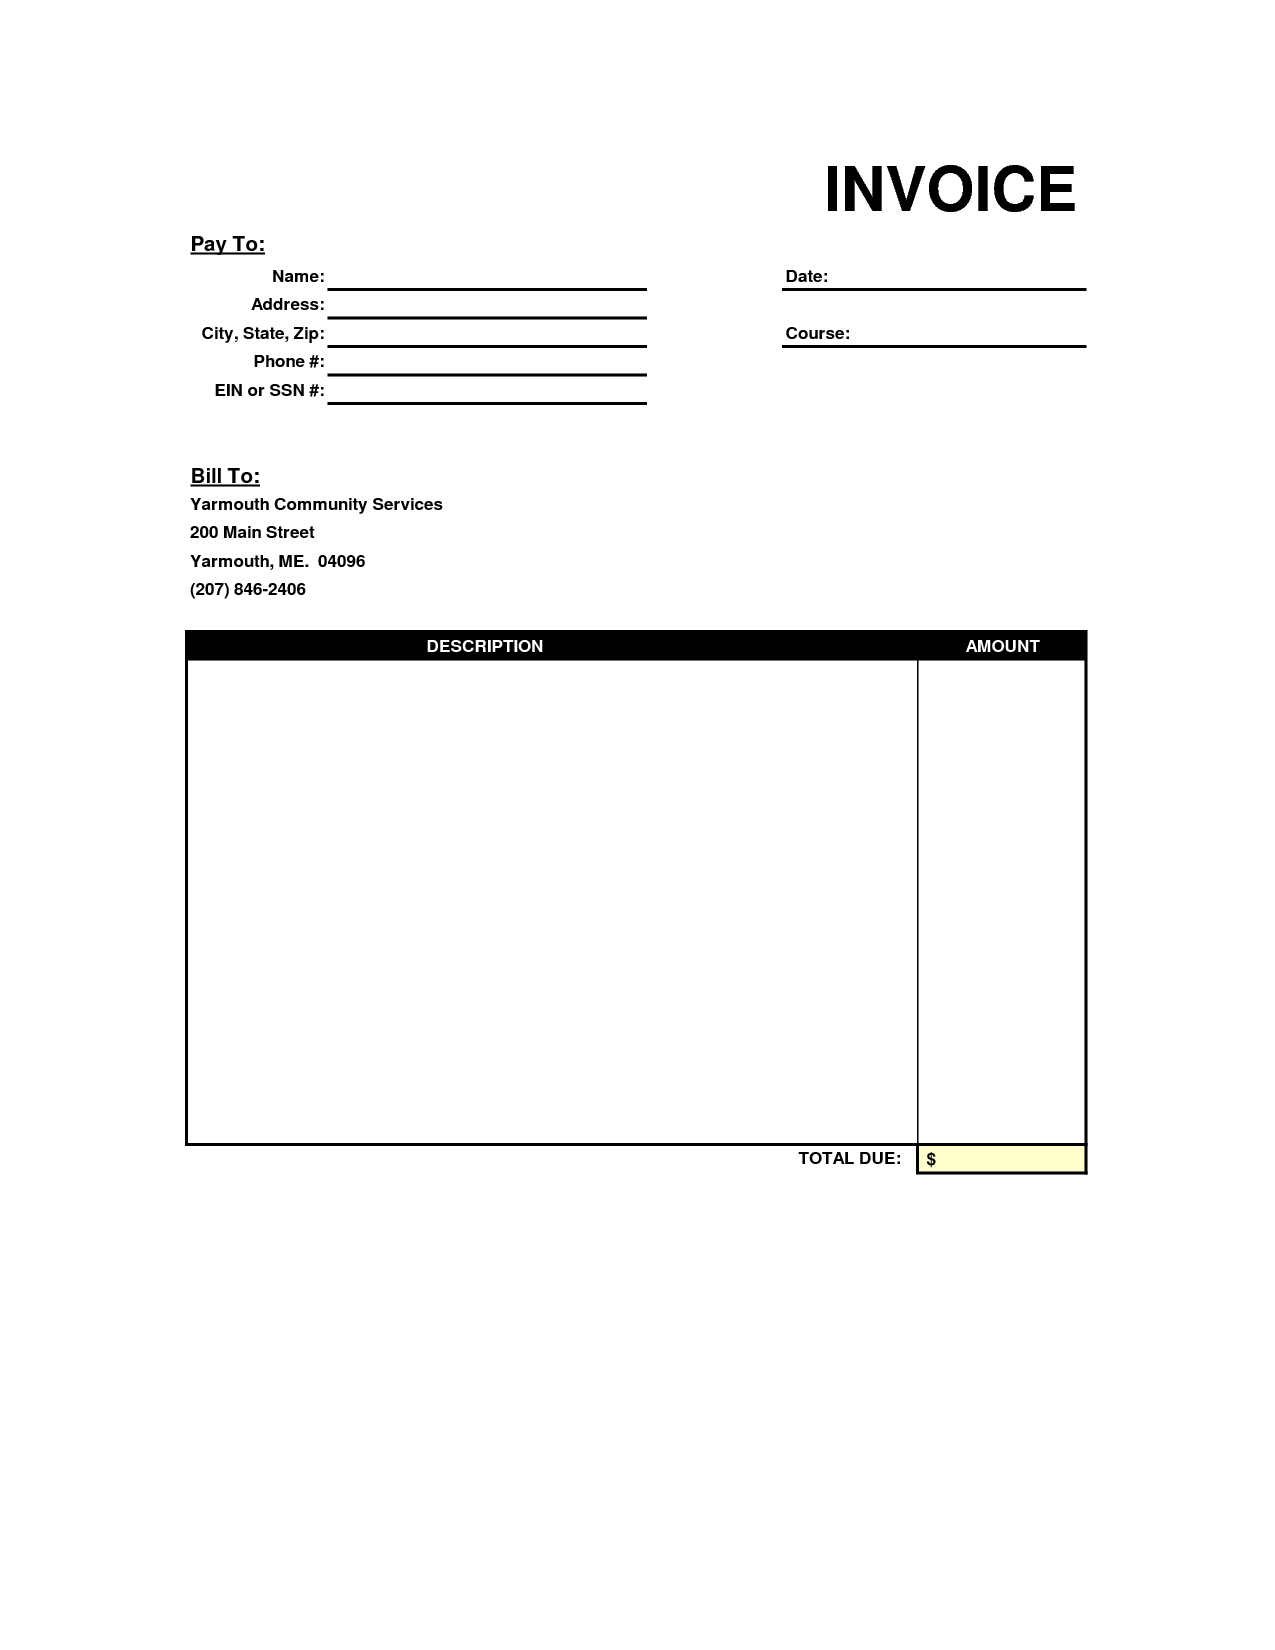 Blank Invoice Microsoft Word. blank invoice document. blank 